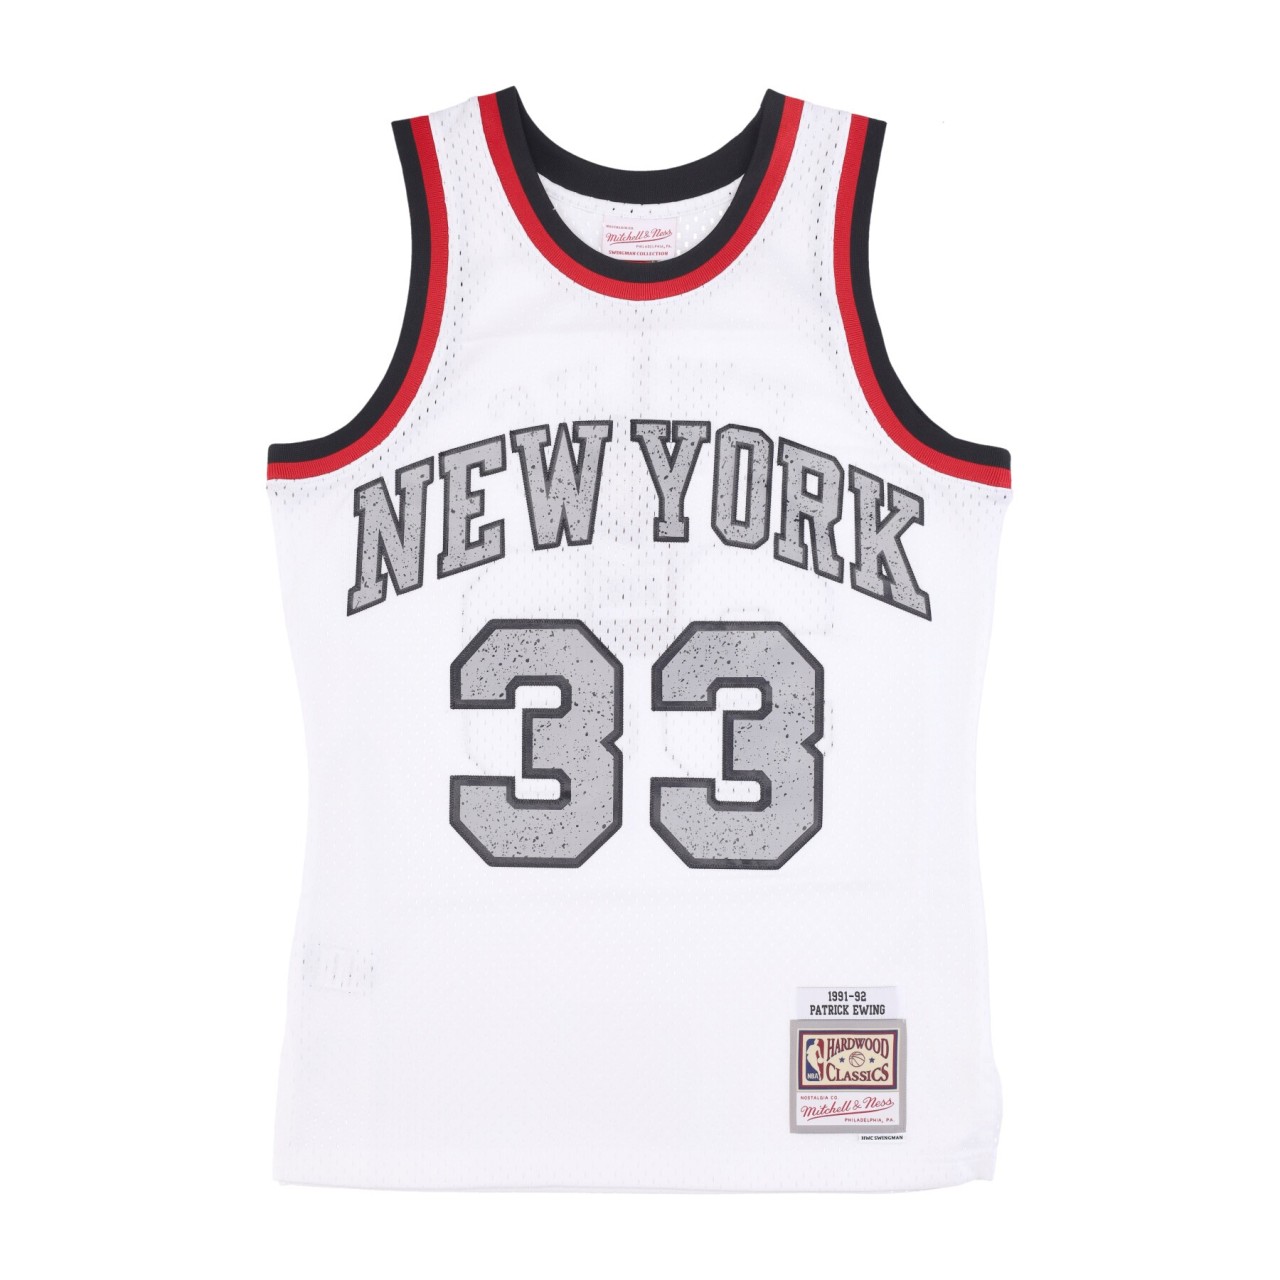 MITCHELL & NESS NBA CRACKED CEMENT SWINGMAN JERSEY HARDWOOD CLASSICS NO 33 PATRICK EWING NEYKNI TFSM5934-NYK91PEWWHIT